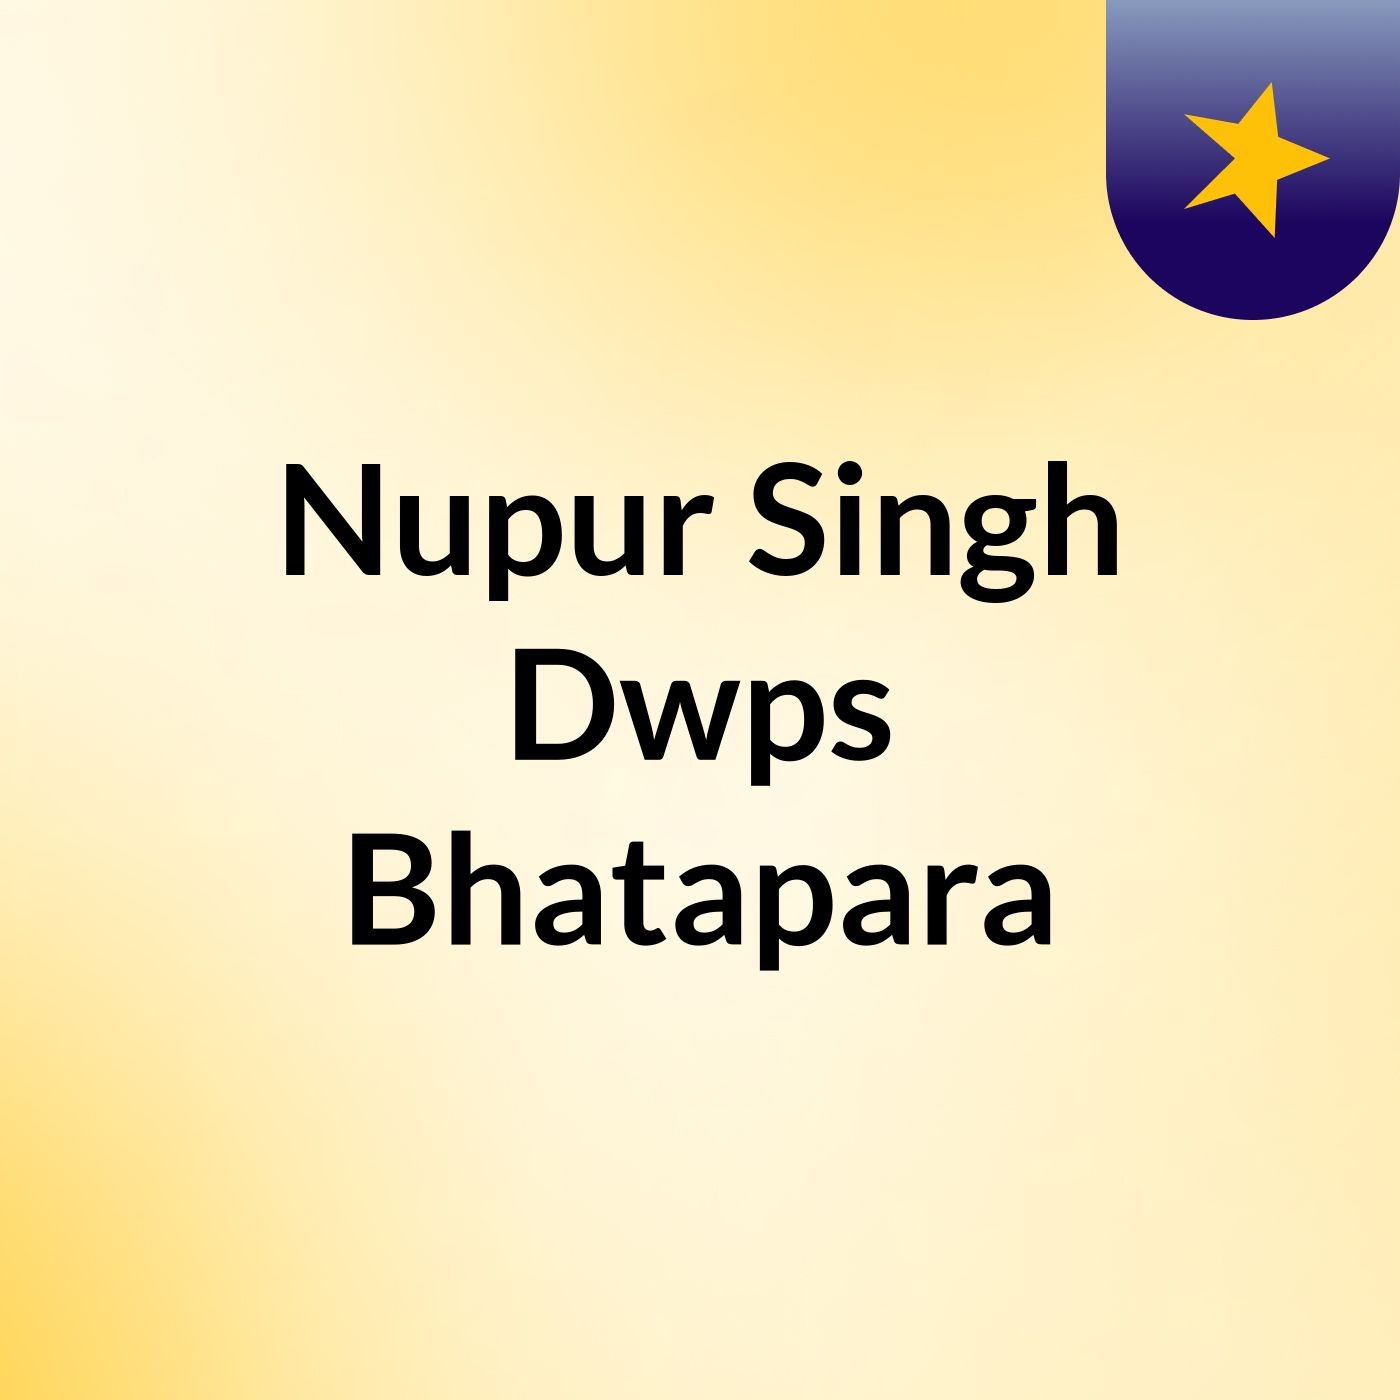 Nupur Singh Dwps Bhatapara